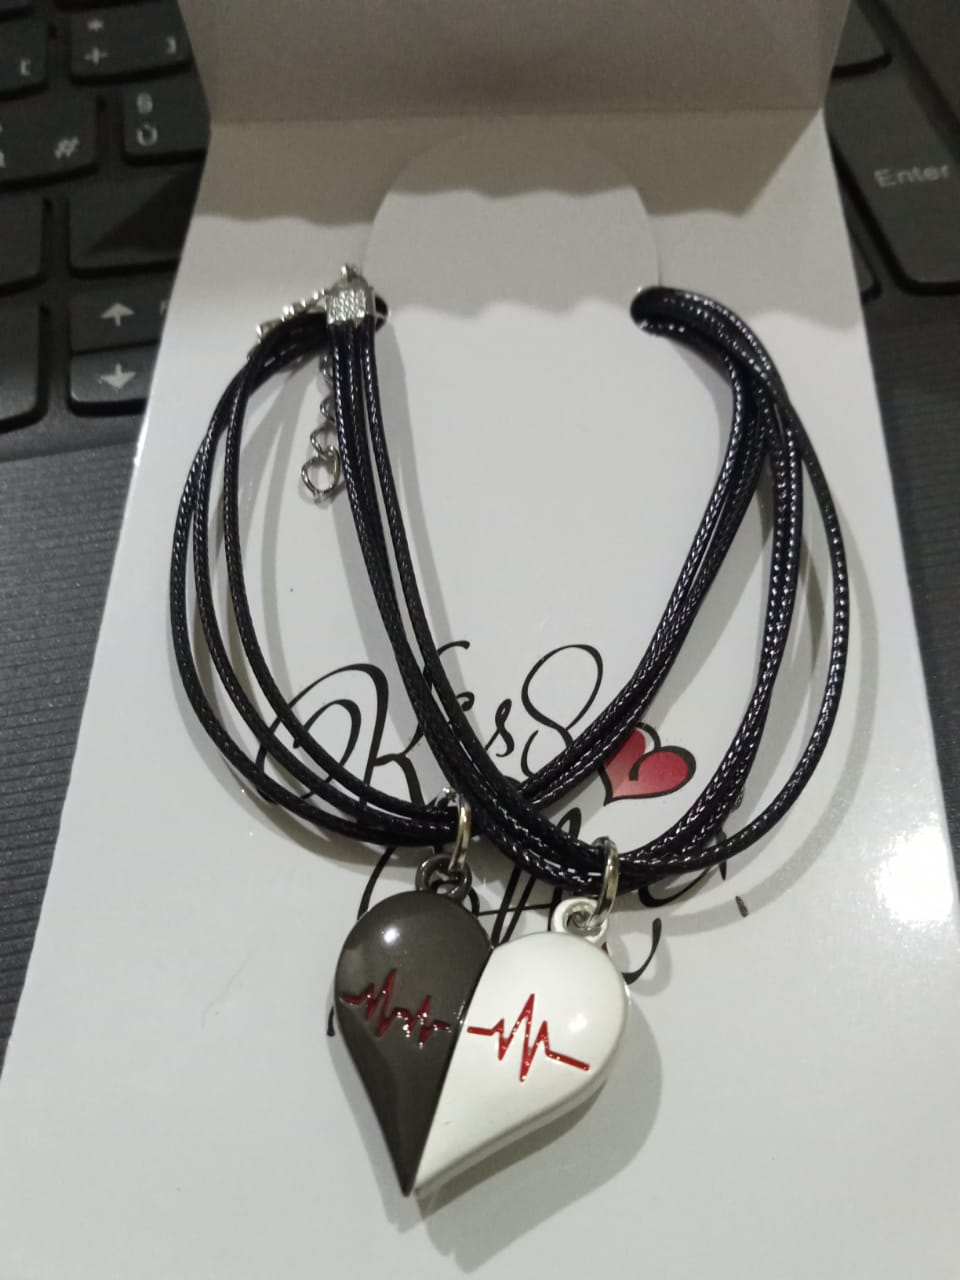 Love Heartbeat 2Pcs Black & White Magnetic Heart Adjustable Bracelets For Lovers